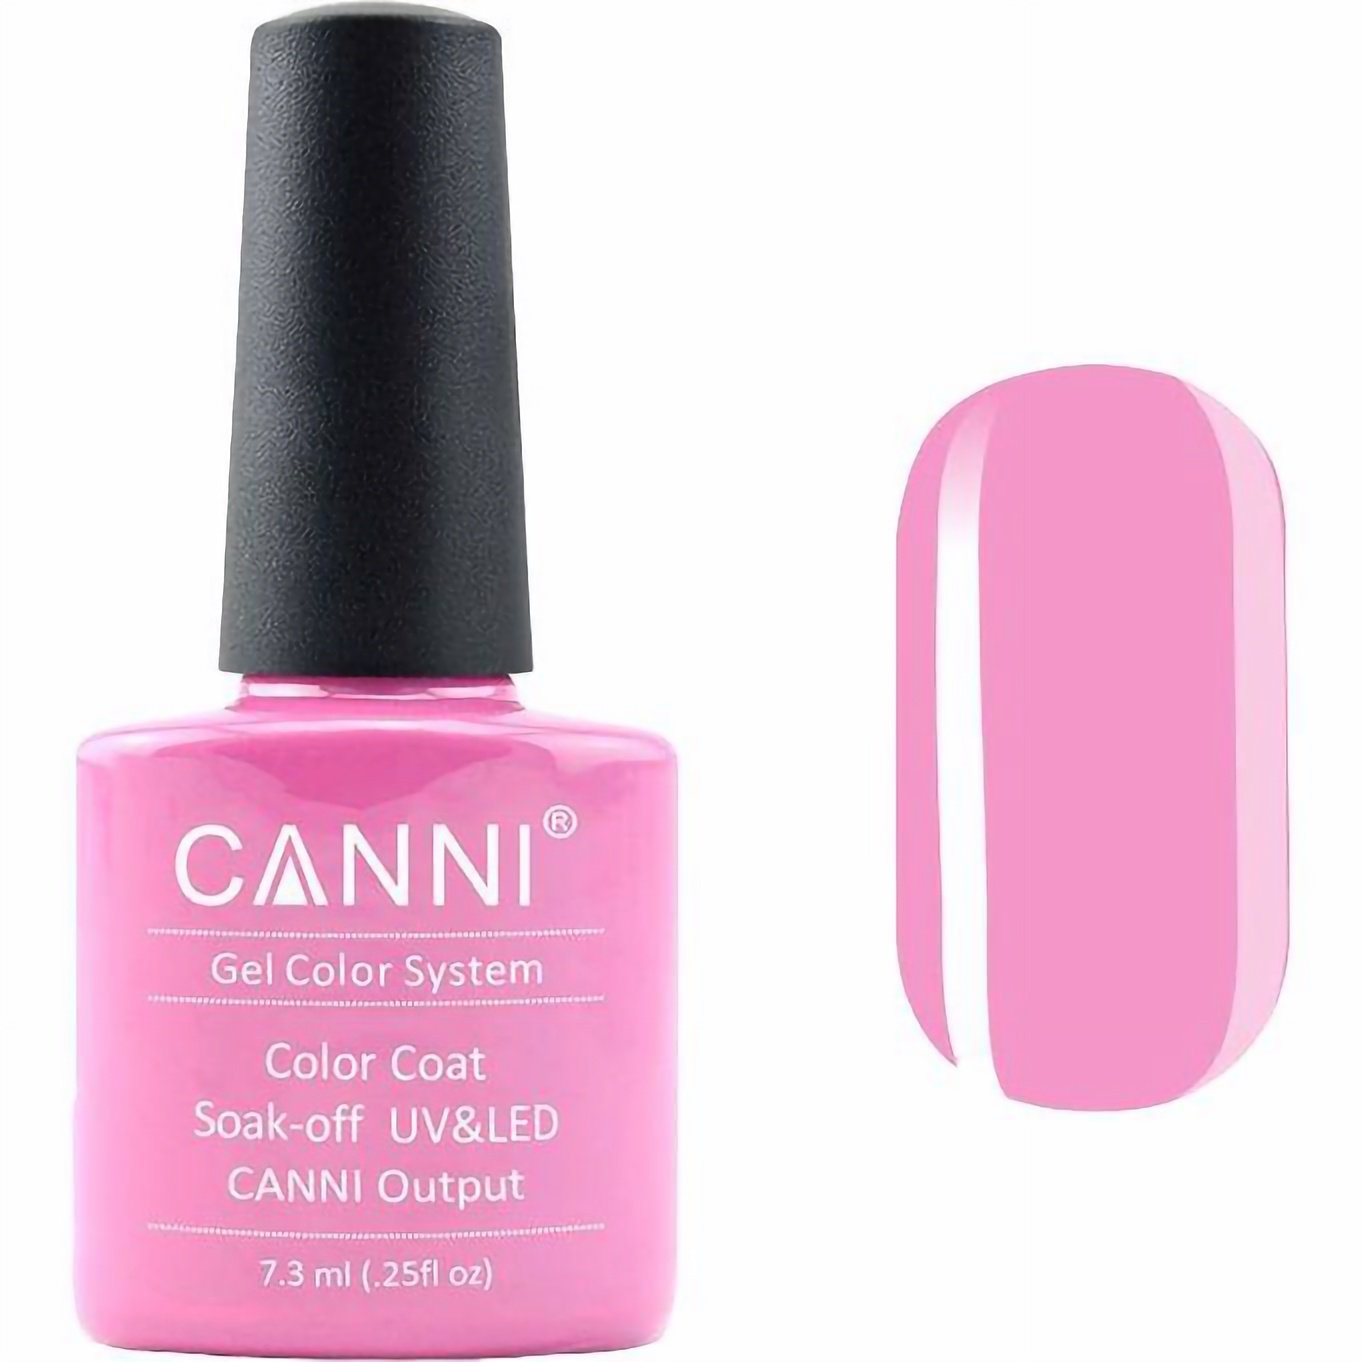 Гель-лак Canni Color Coat Soak-off UV&LED 238 лілово-рожевий 7.3 мл - фото 1